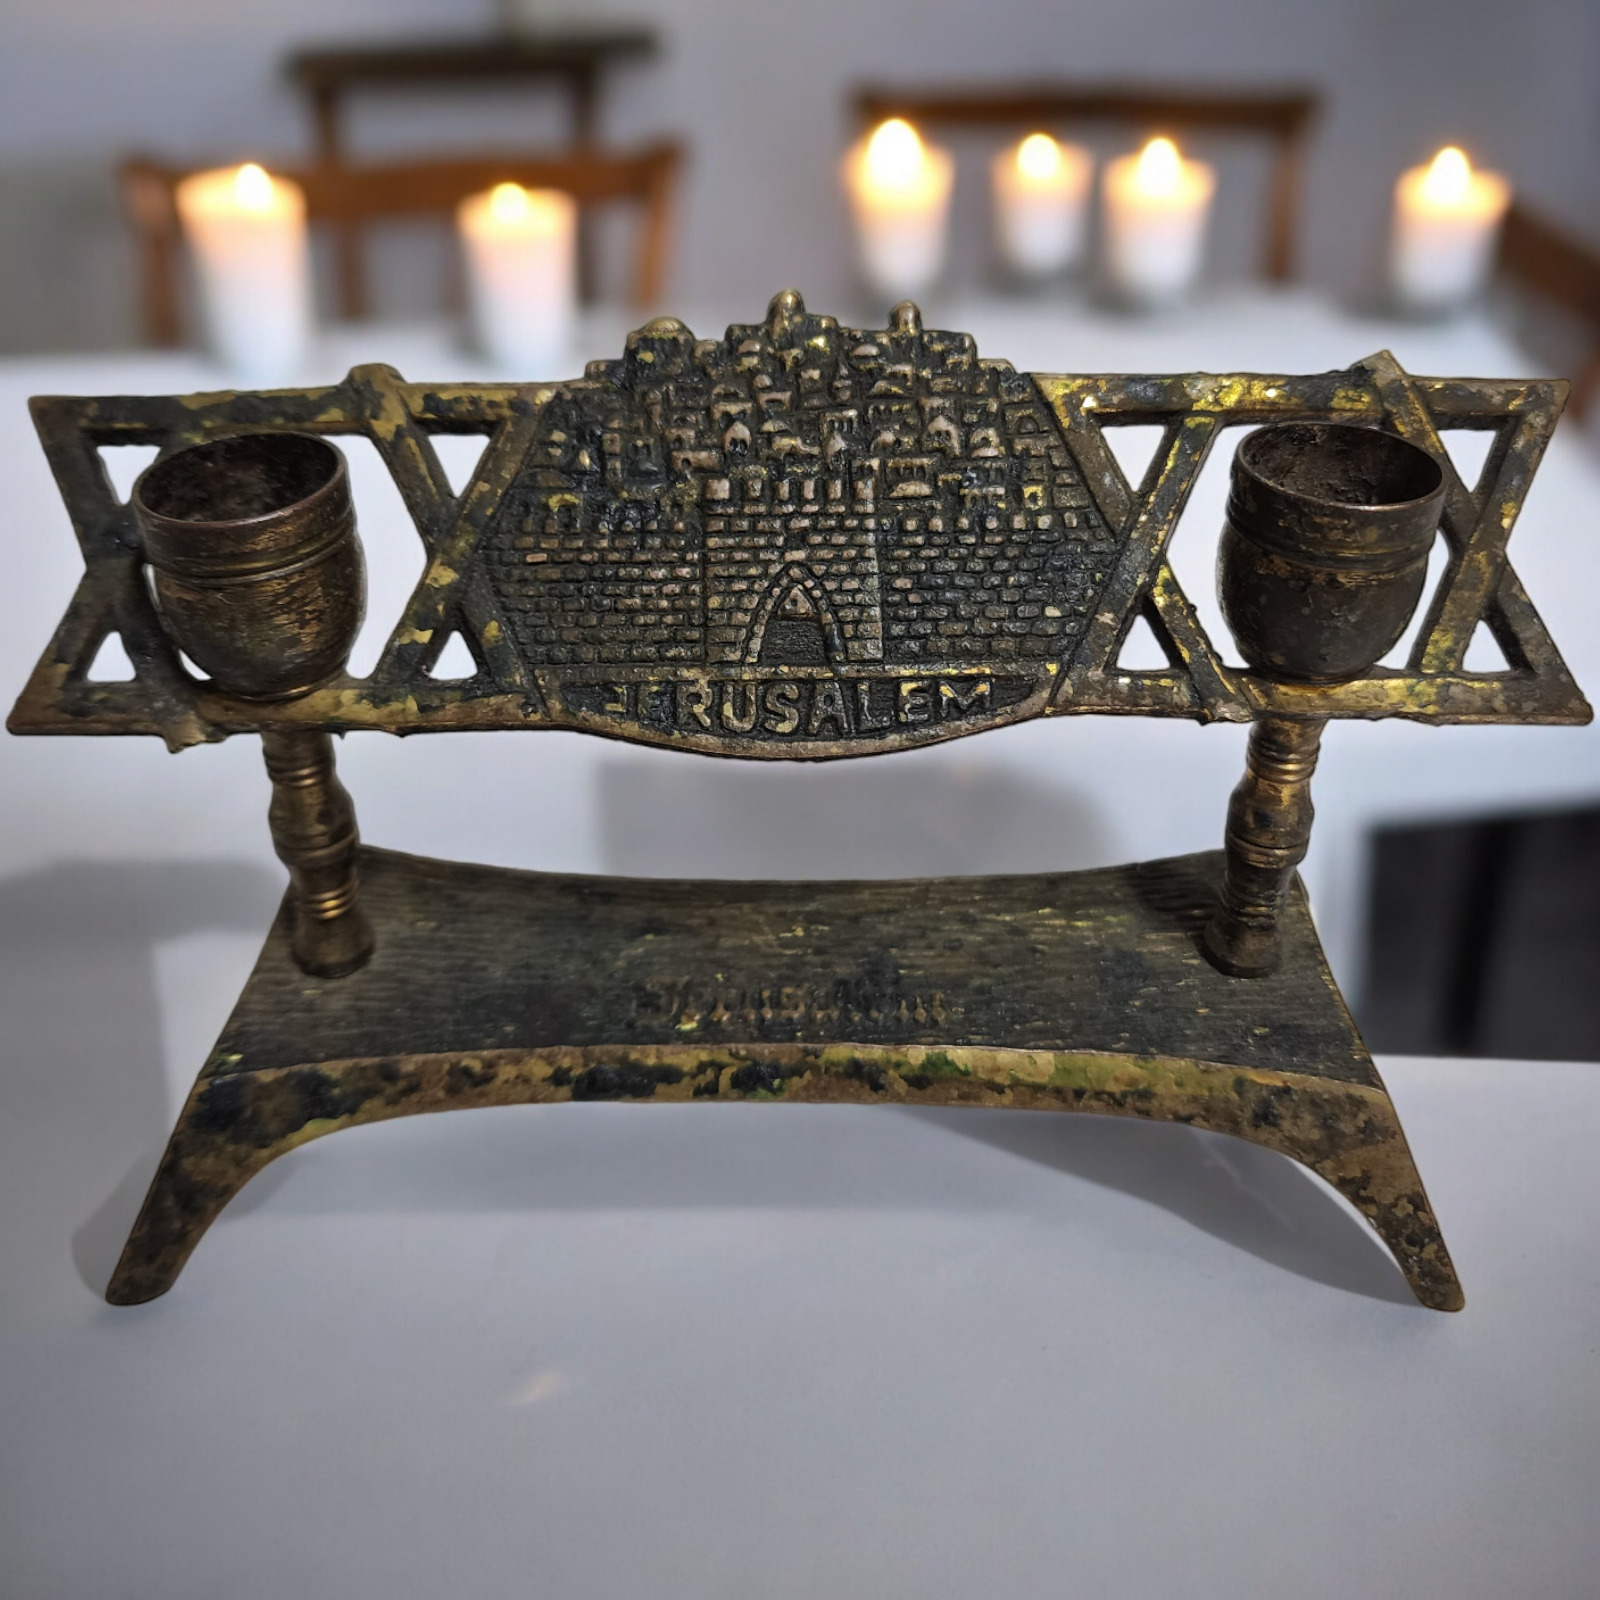 Antique Judaica Brass Menorah Candle Holder Jerusalem and Star of David Design